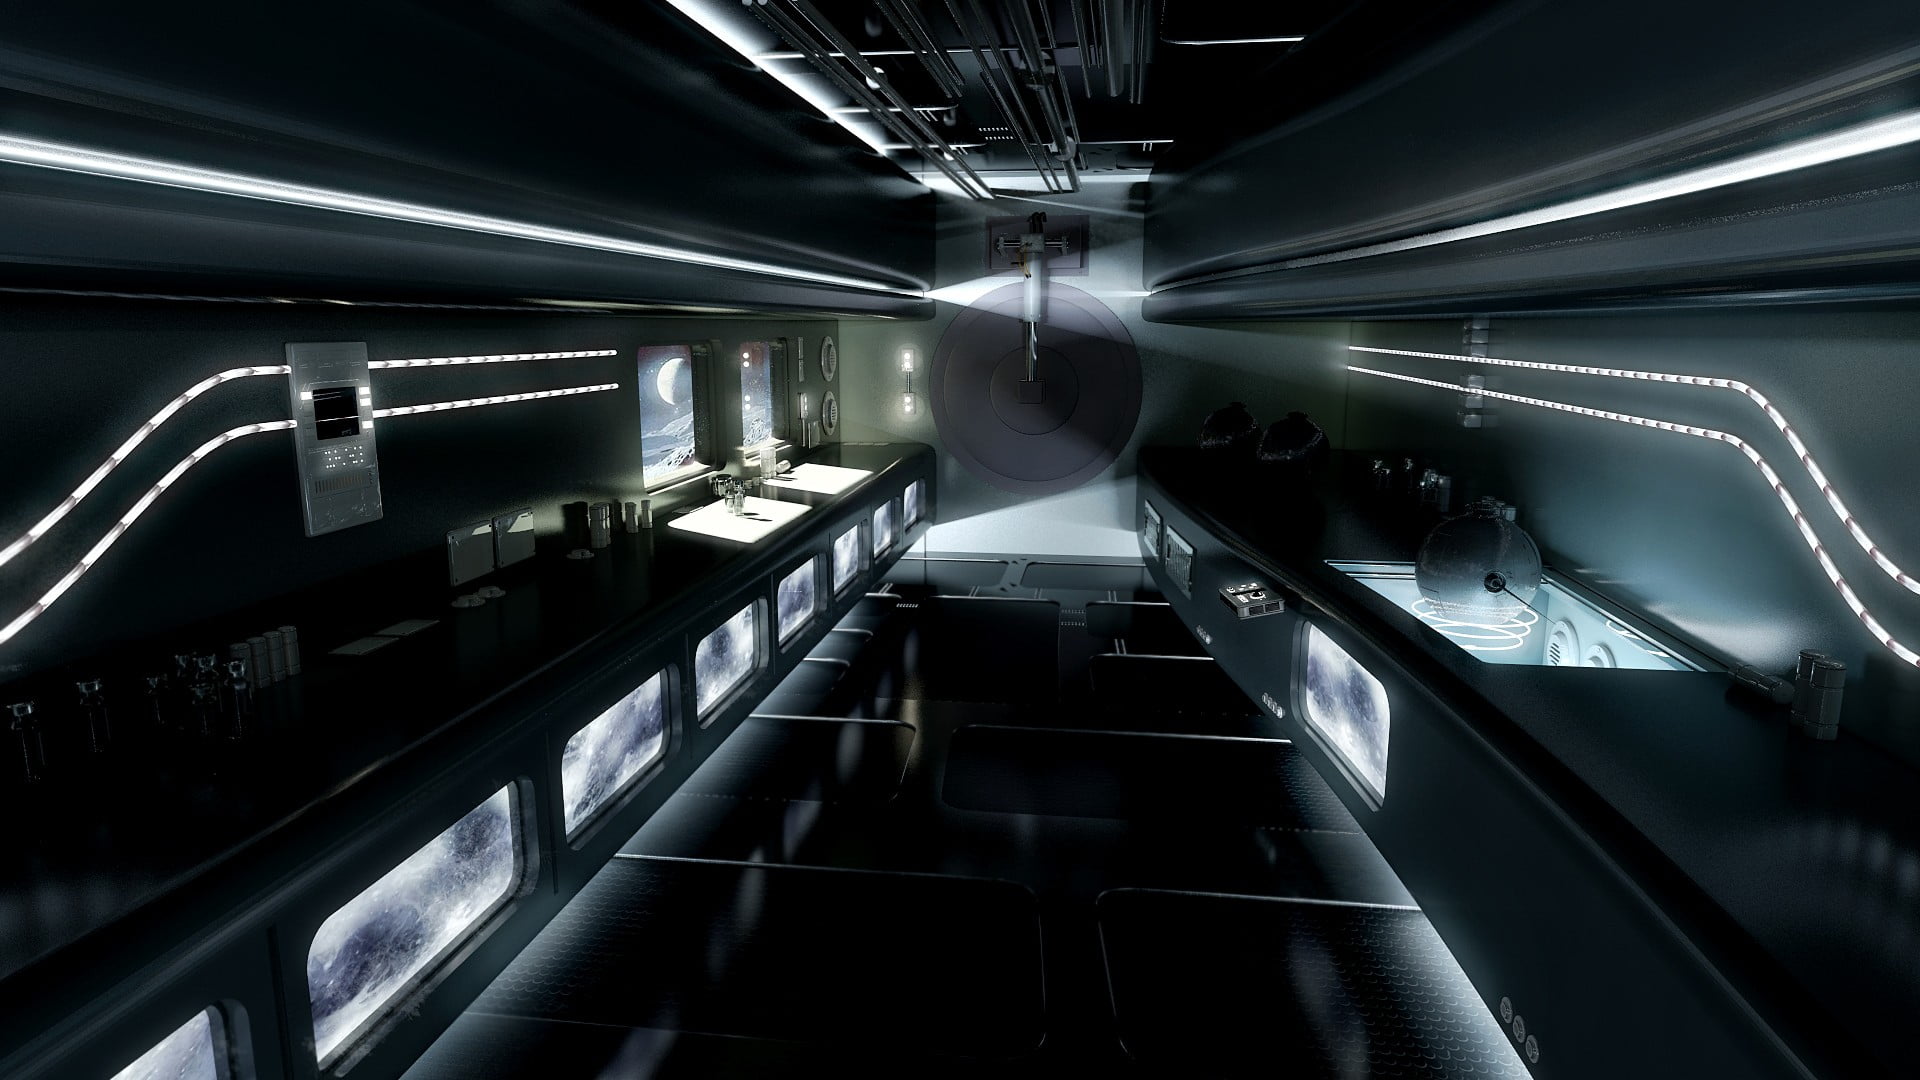 Black And Gray Cabinet Futuristic Interior Space Station